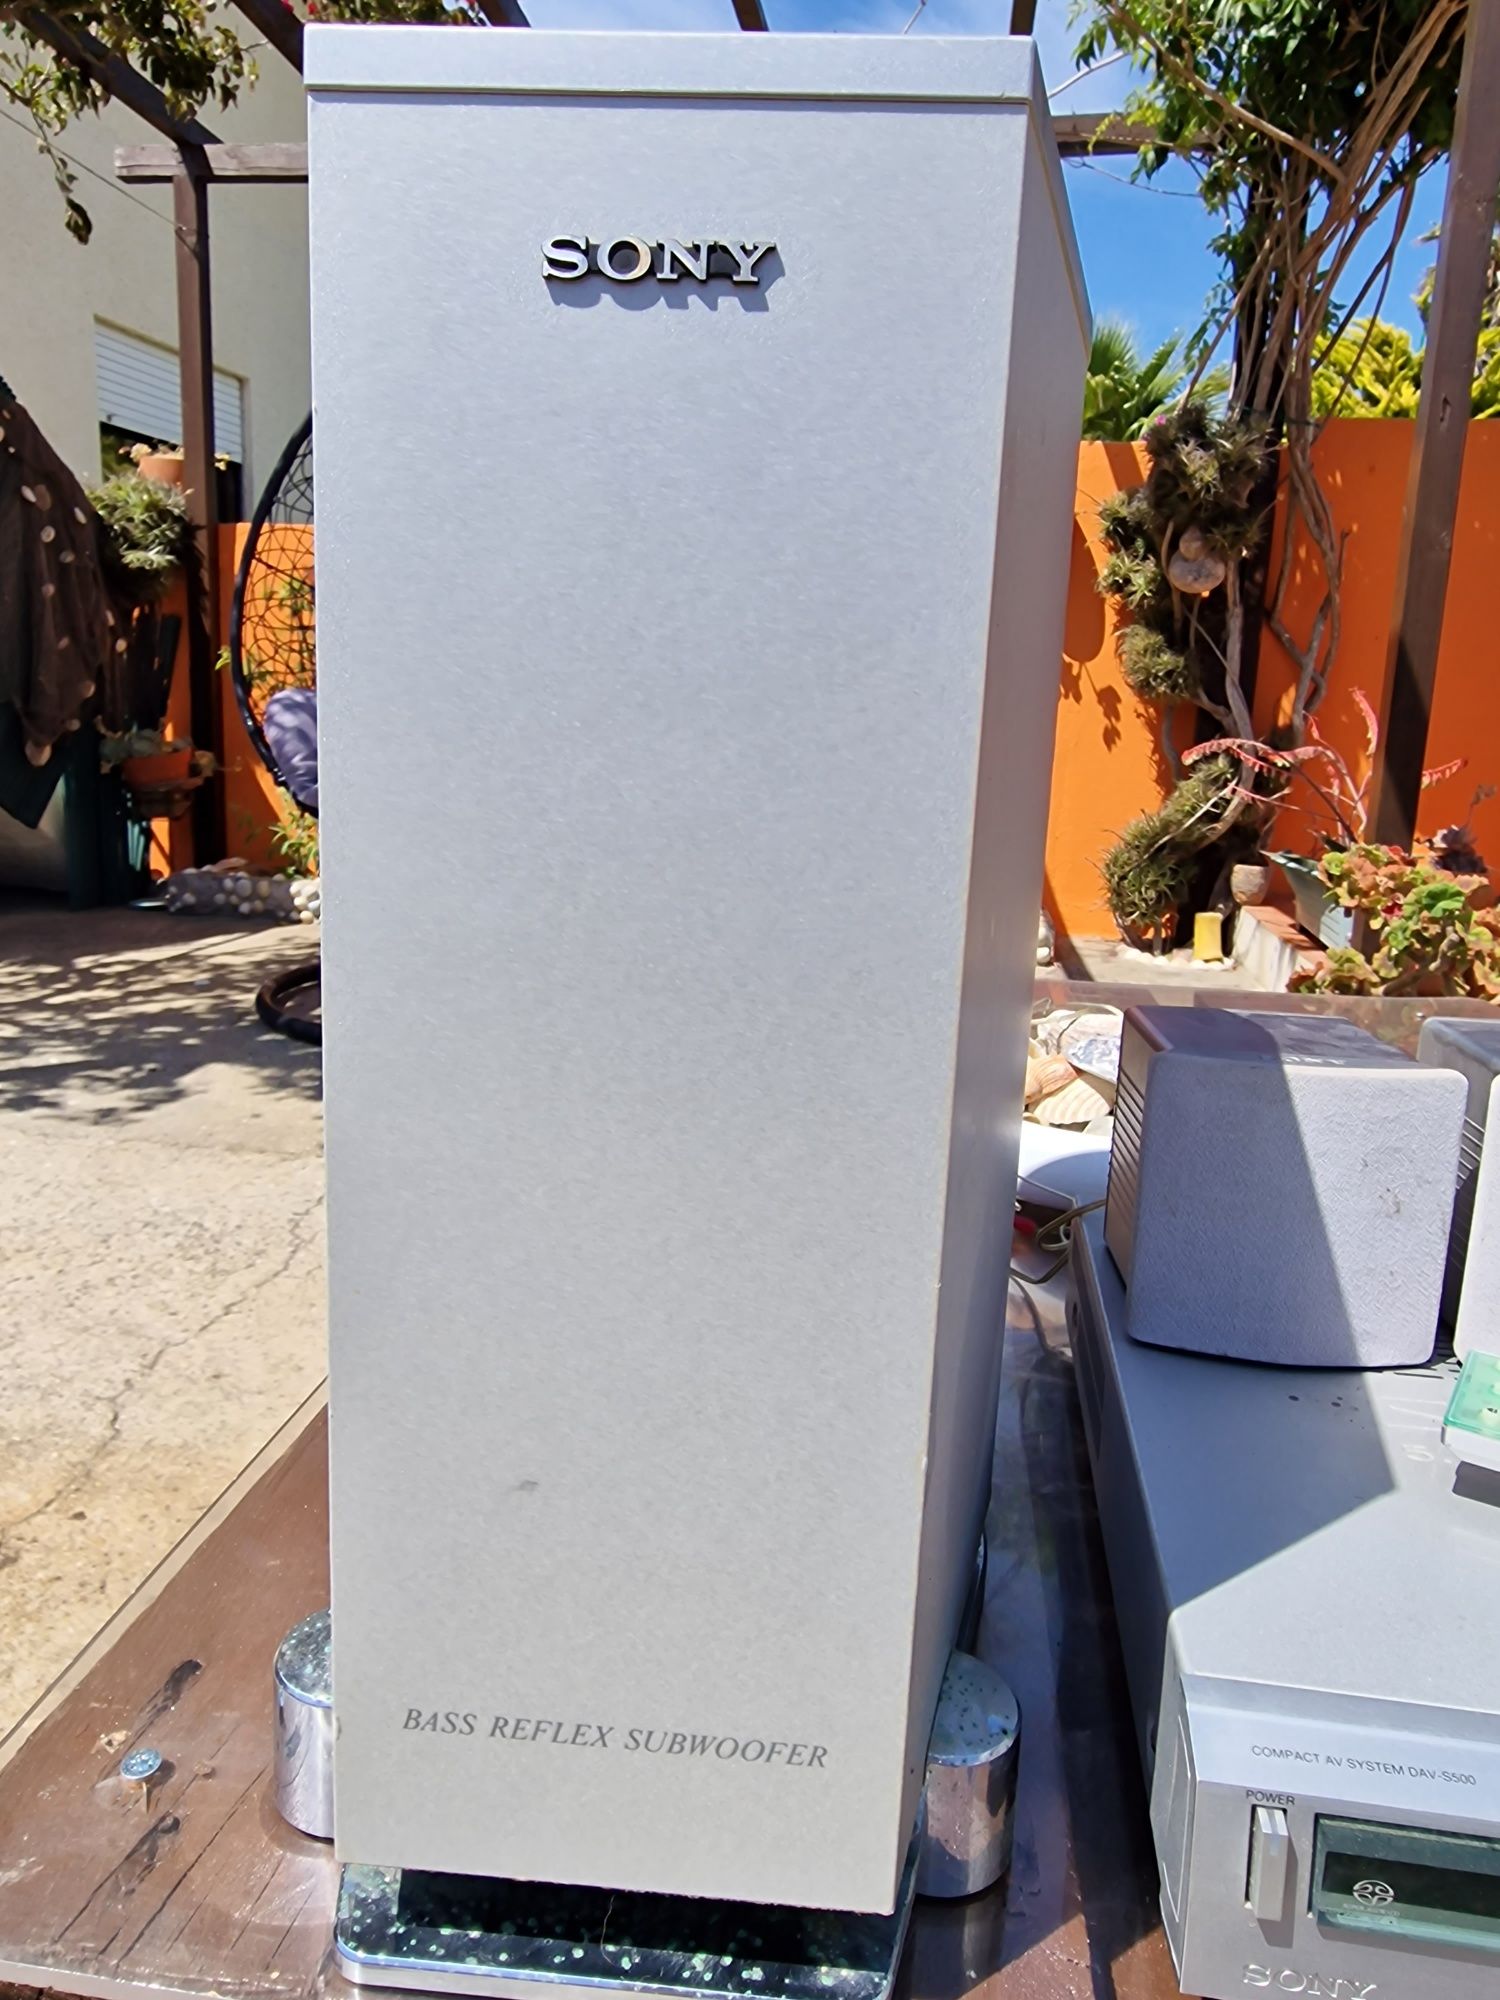 Sony 5.1 DAV-S500